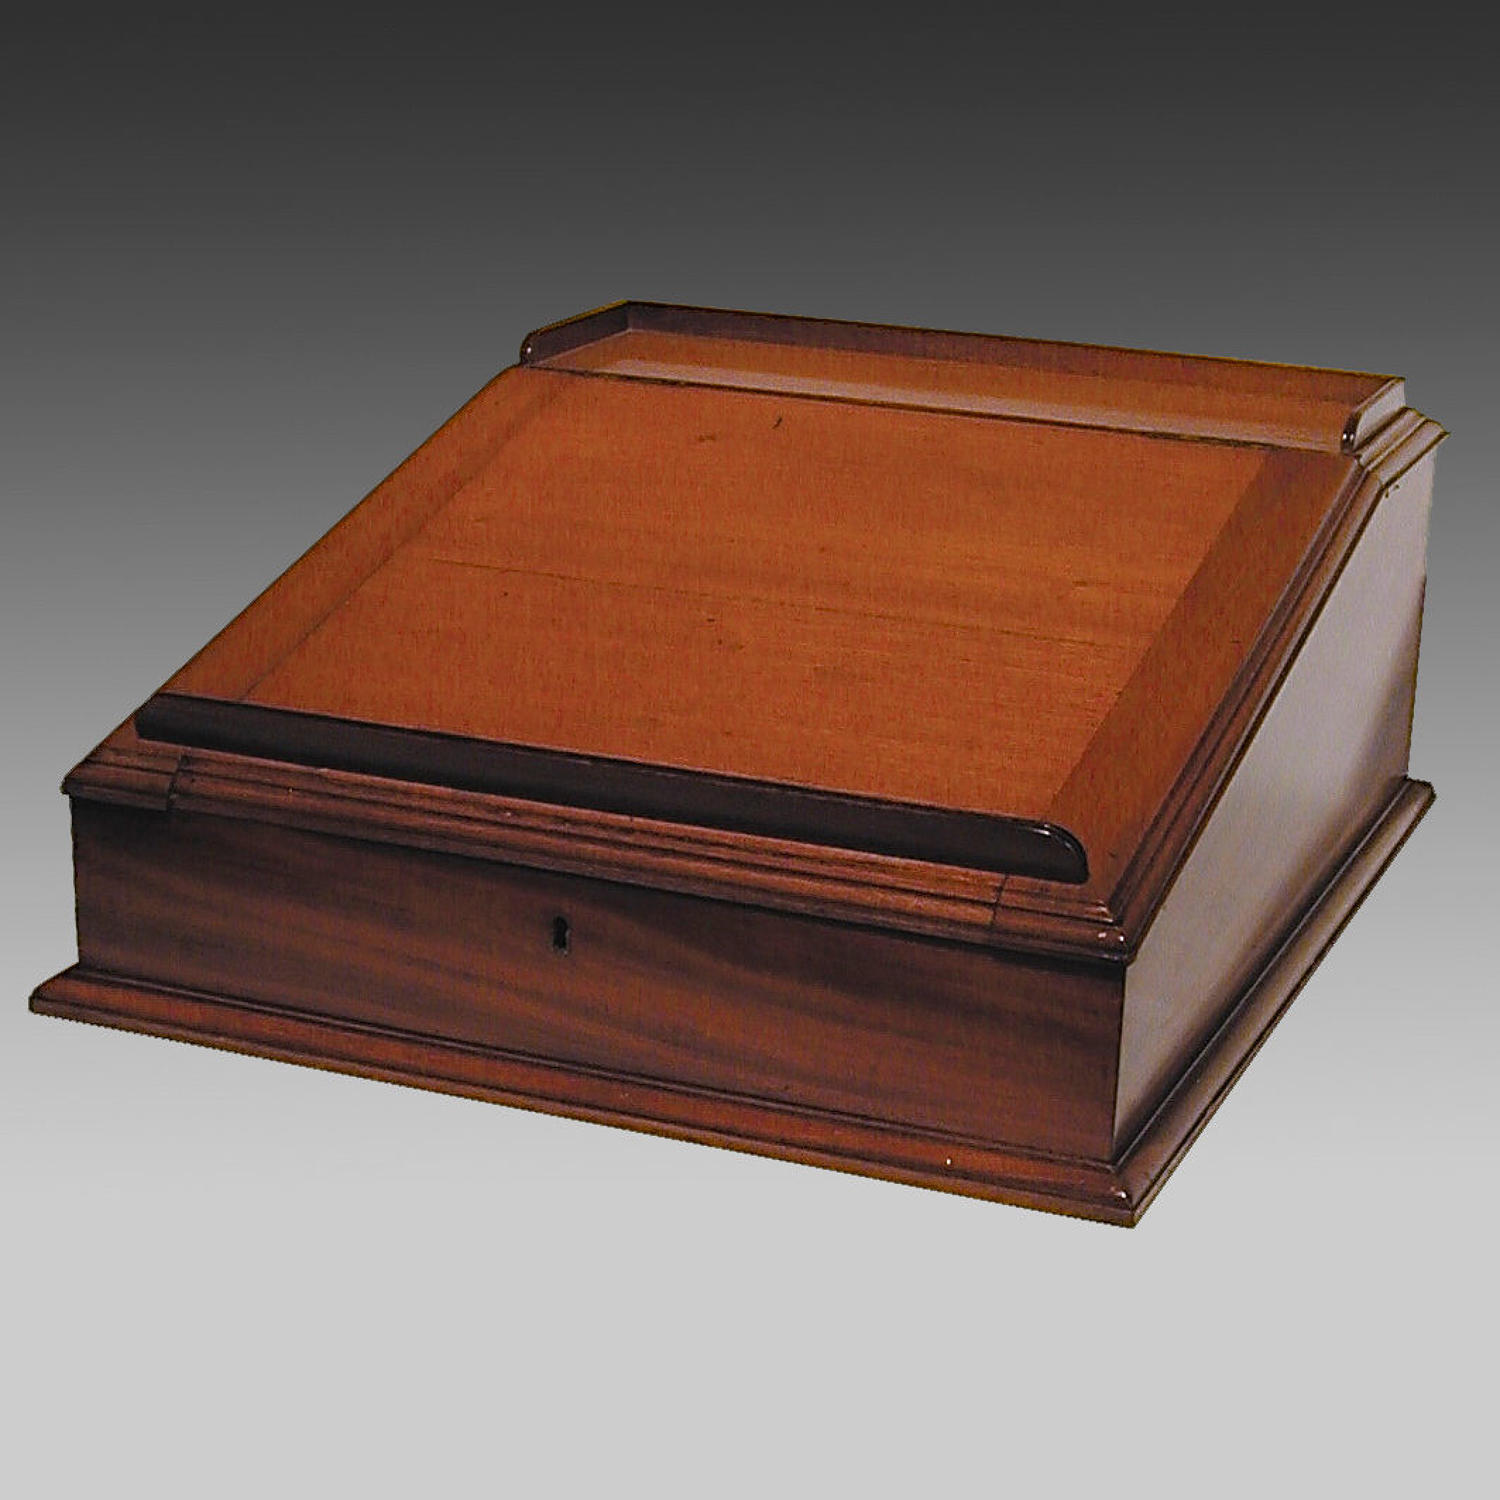 19th century mahogany campaign desk